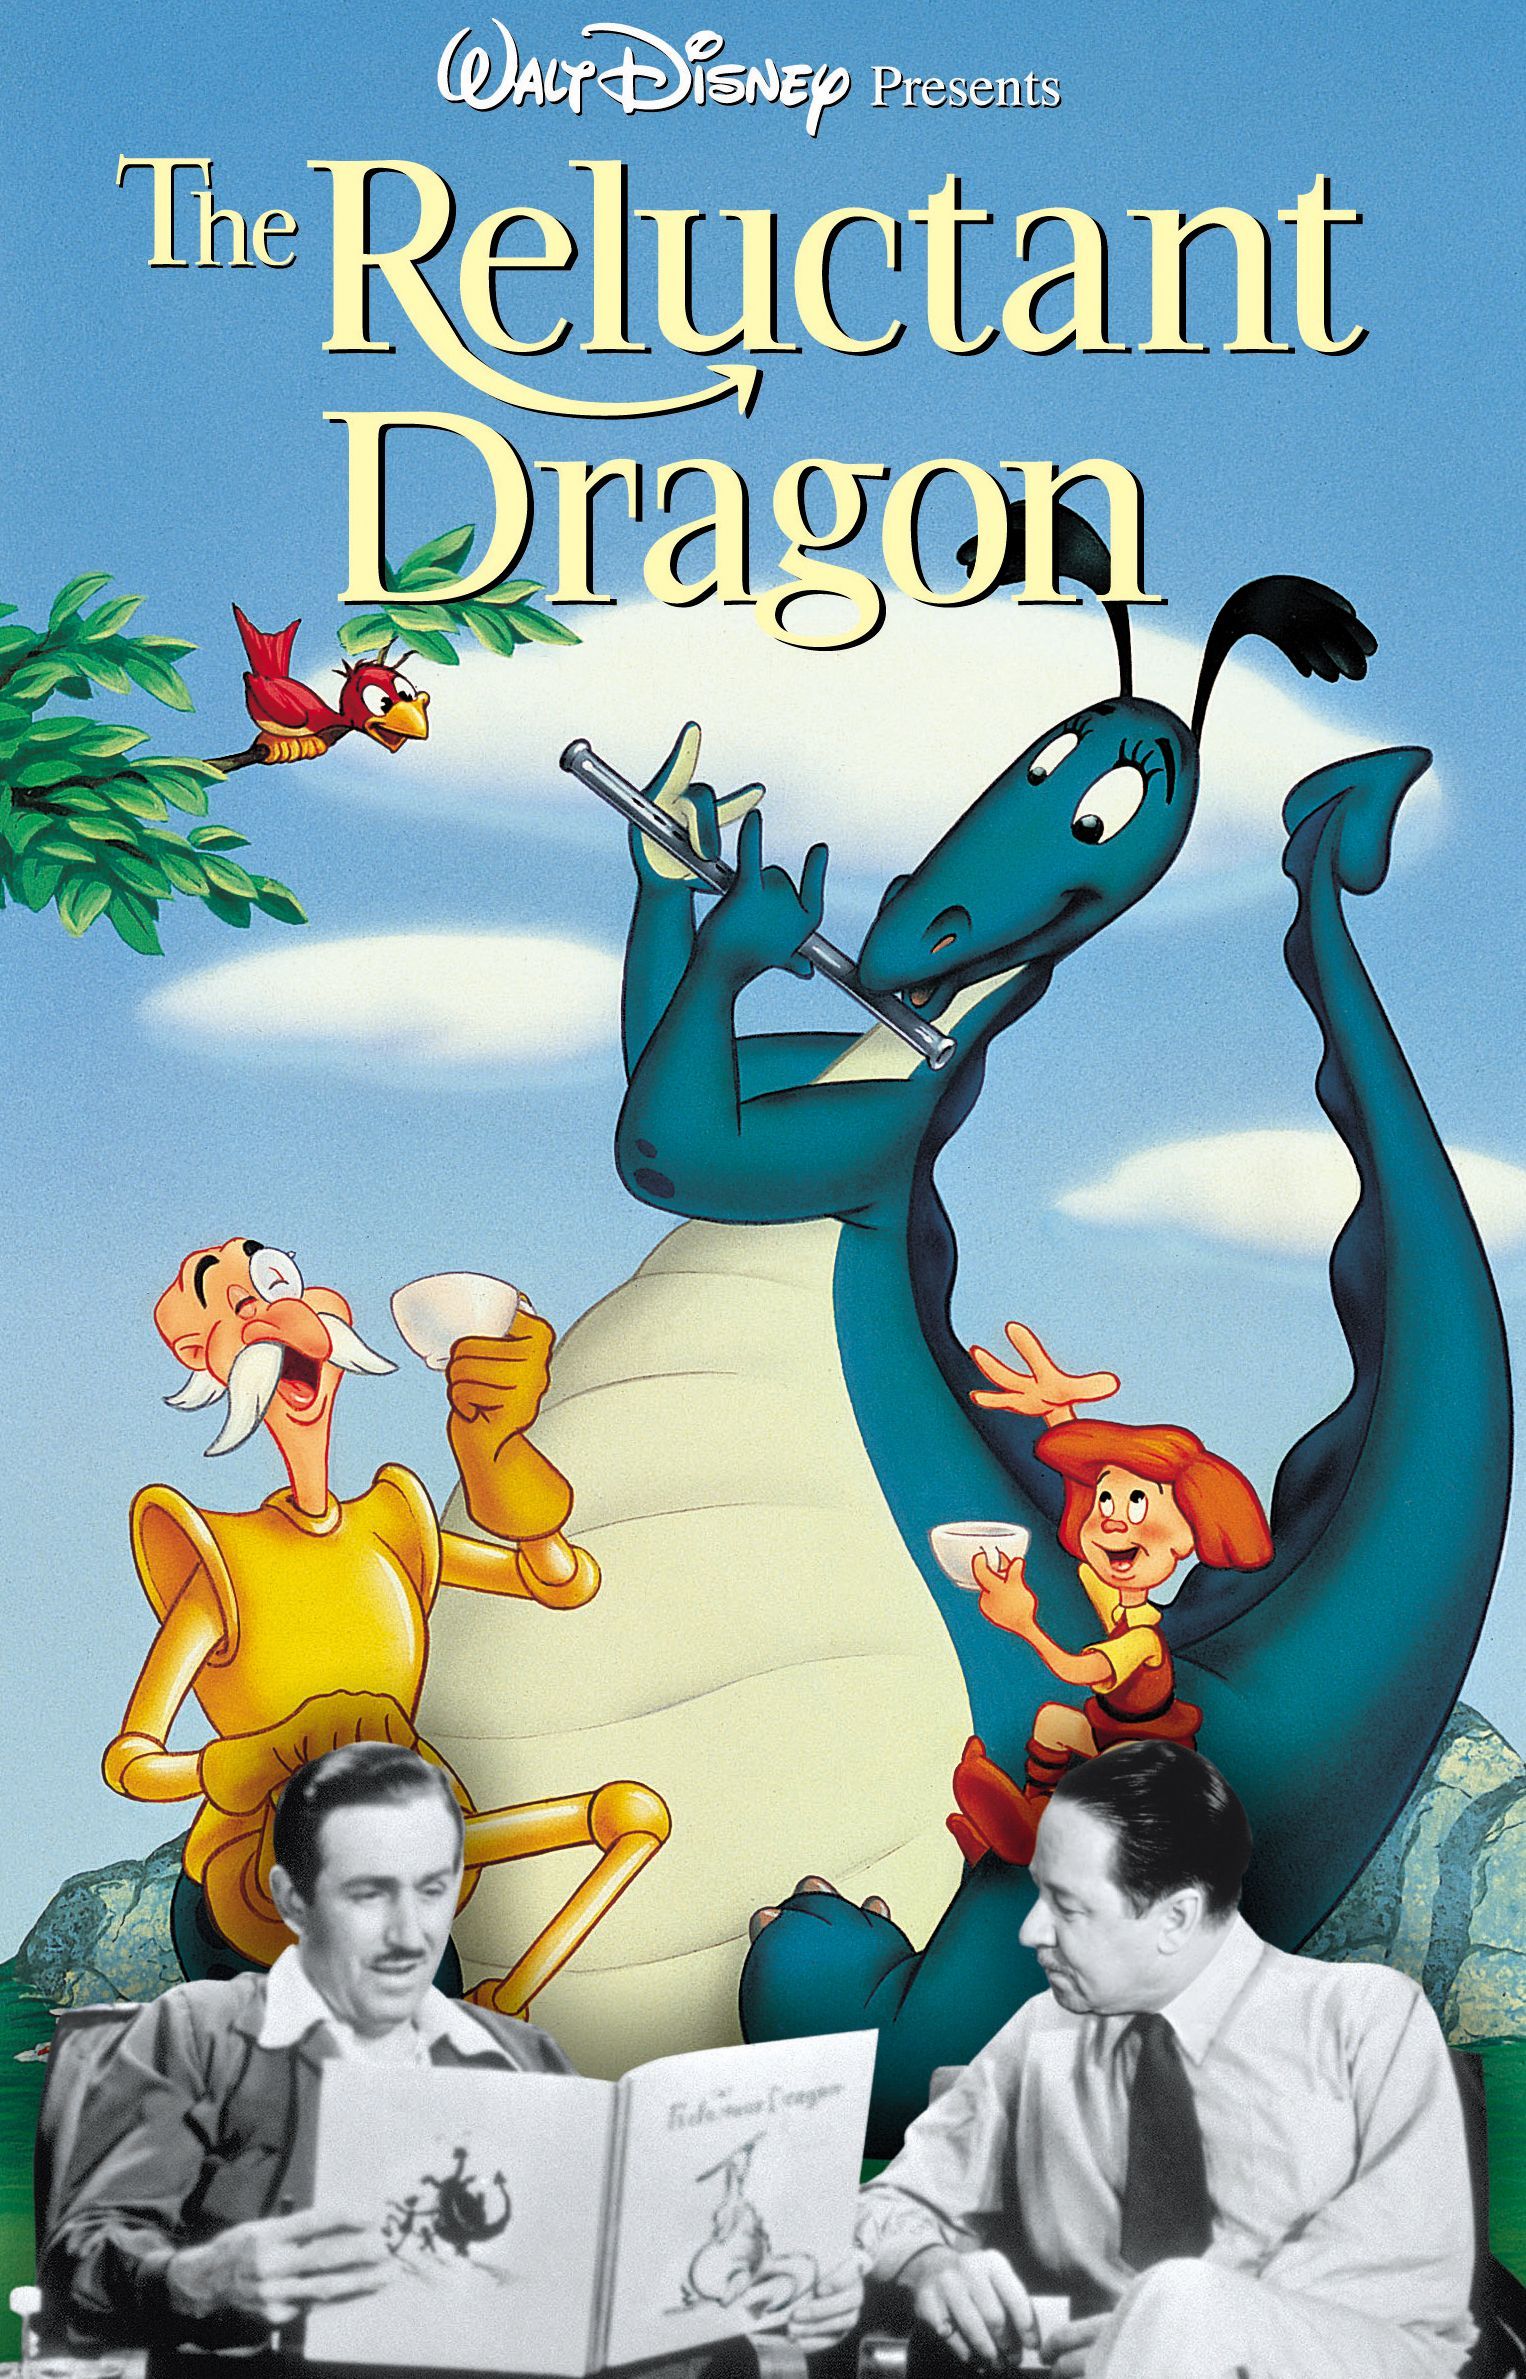 The Reluctant Dragon (1941) DISNEY CLASSIC FILMS. Walt disney movies, Disney movies, Walt disney picture